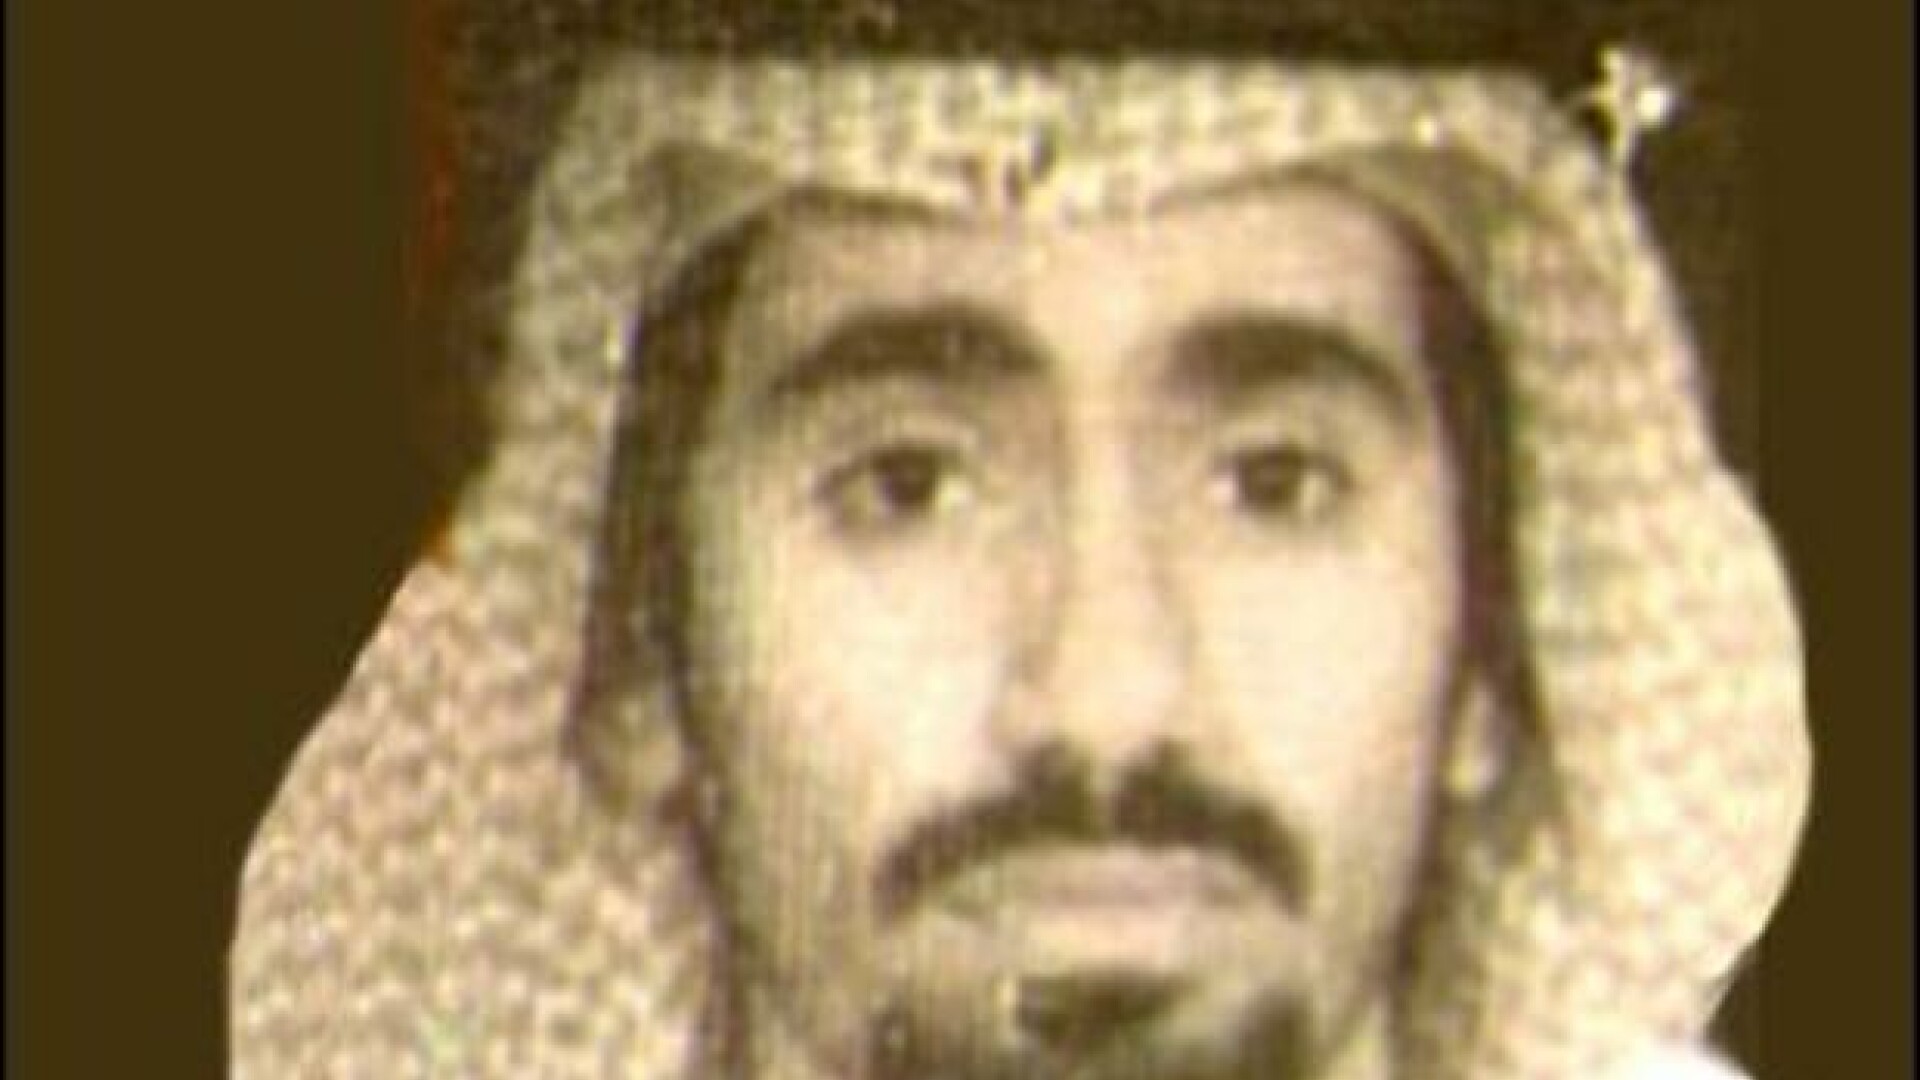 Abd al-Rahim Al Nashiri